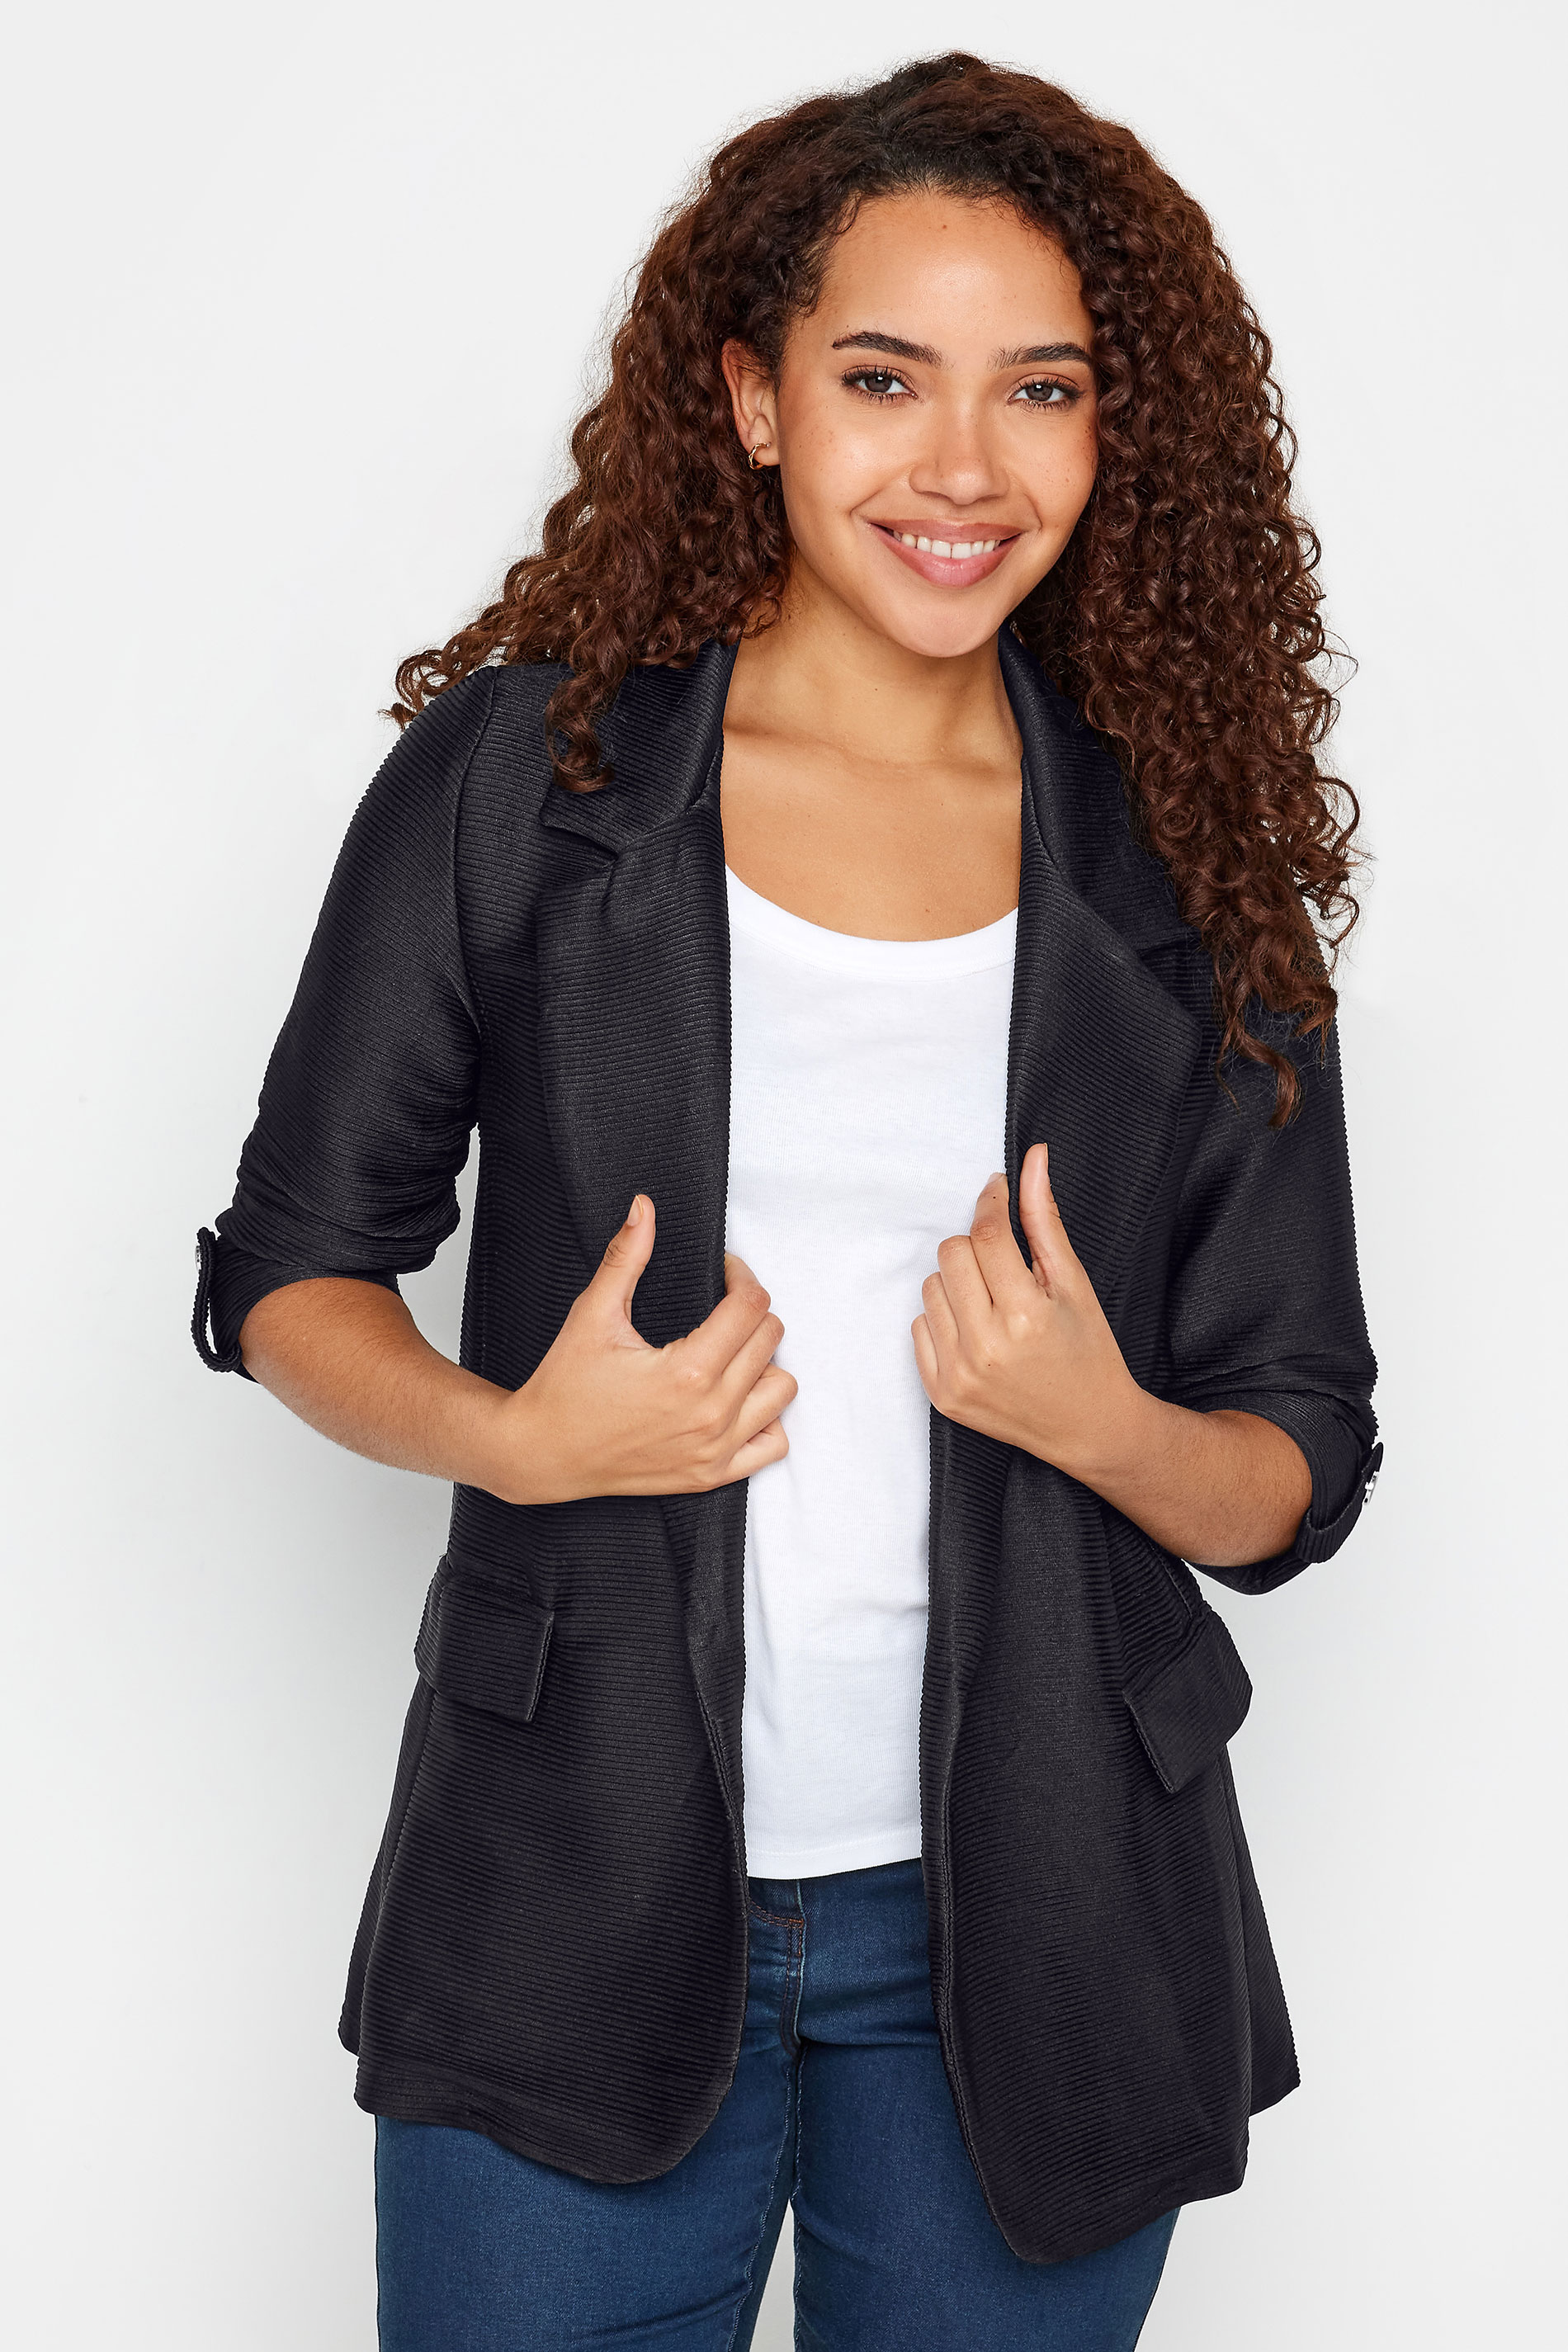 M&Co Black Textured Blazer Jacket | M&Co 1